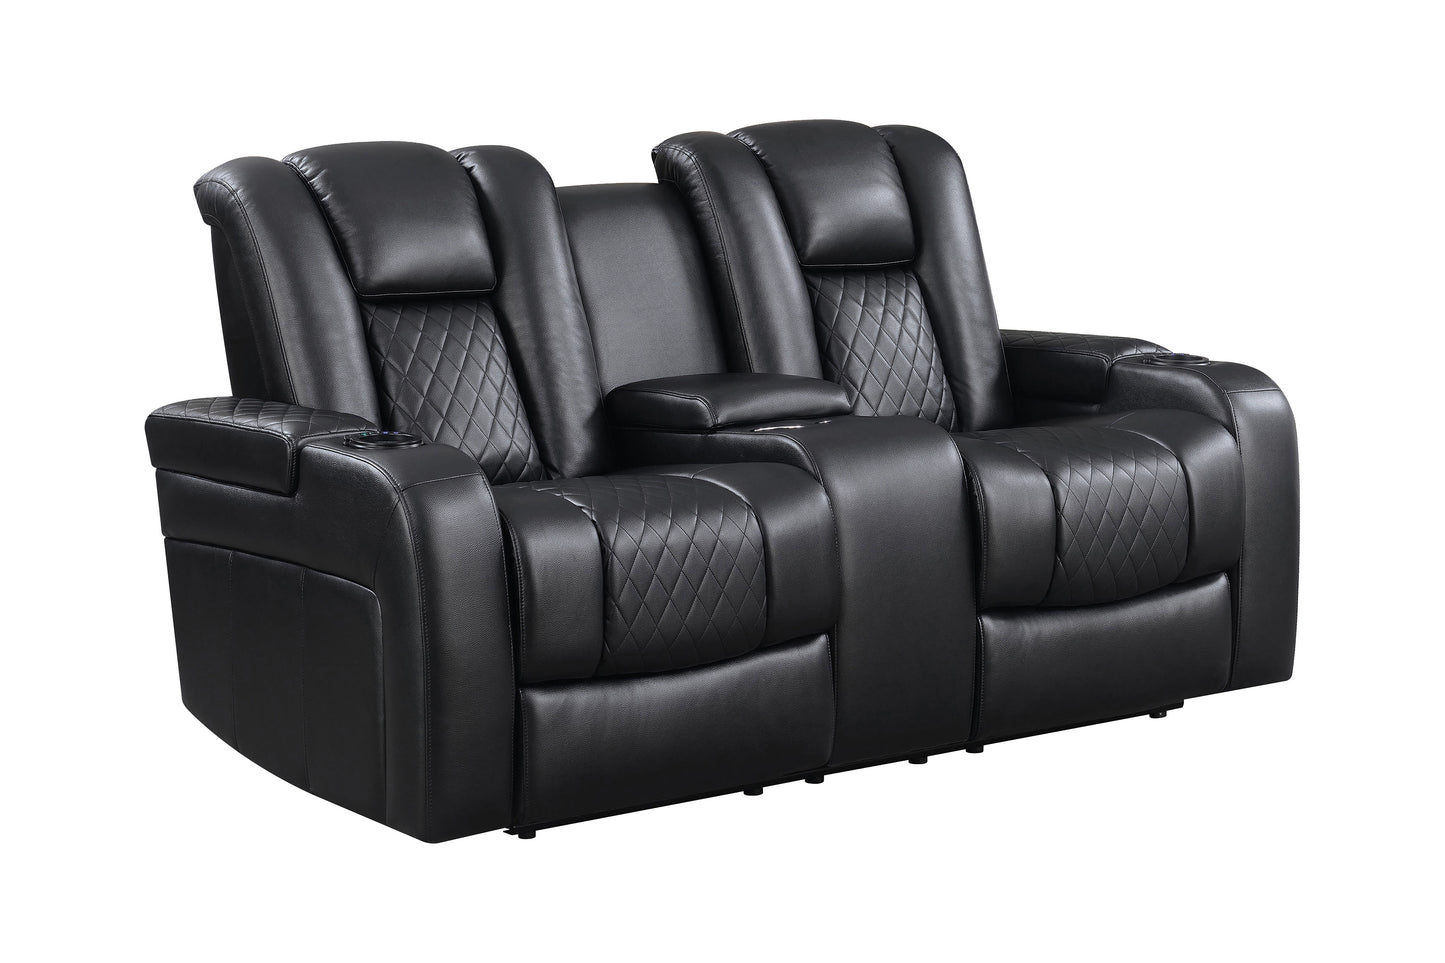 Delangelo Upholstered Tufted Living Room Set - 602301P